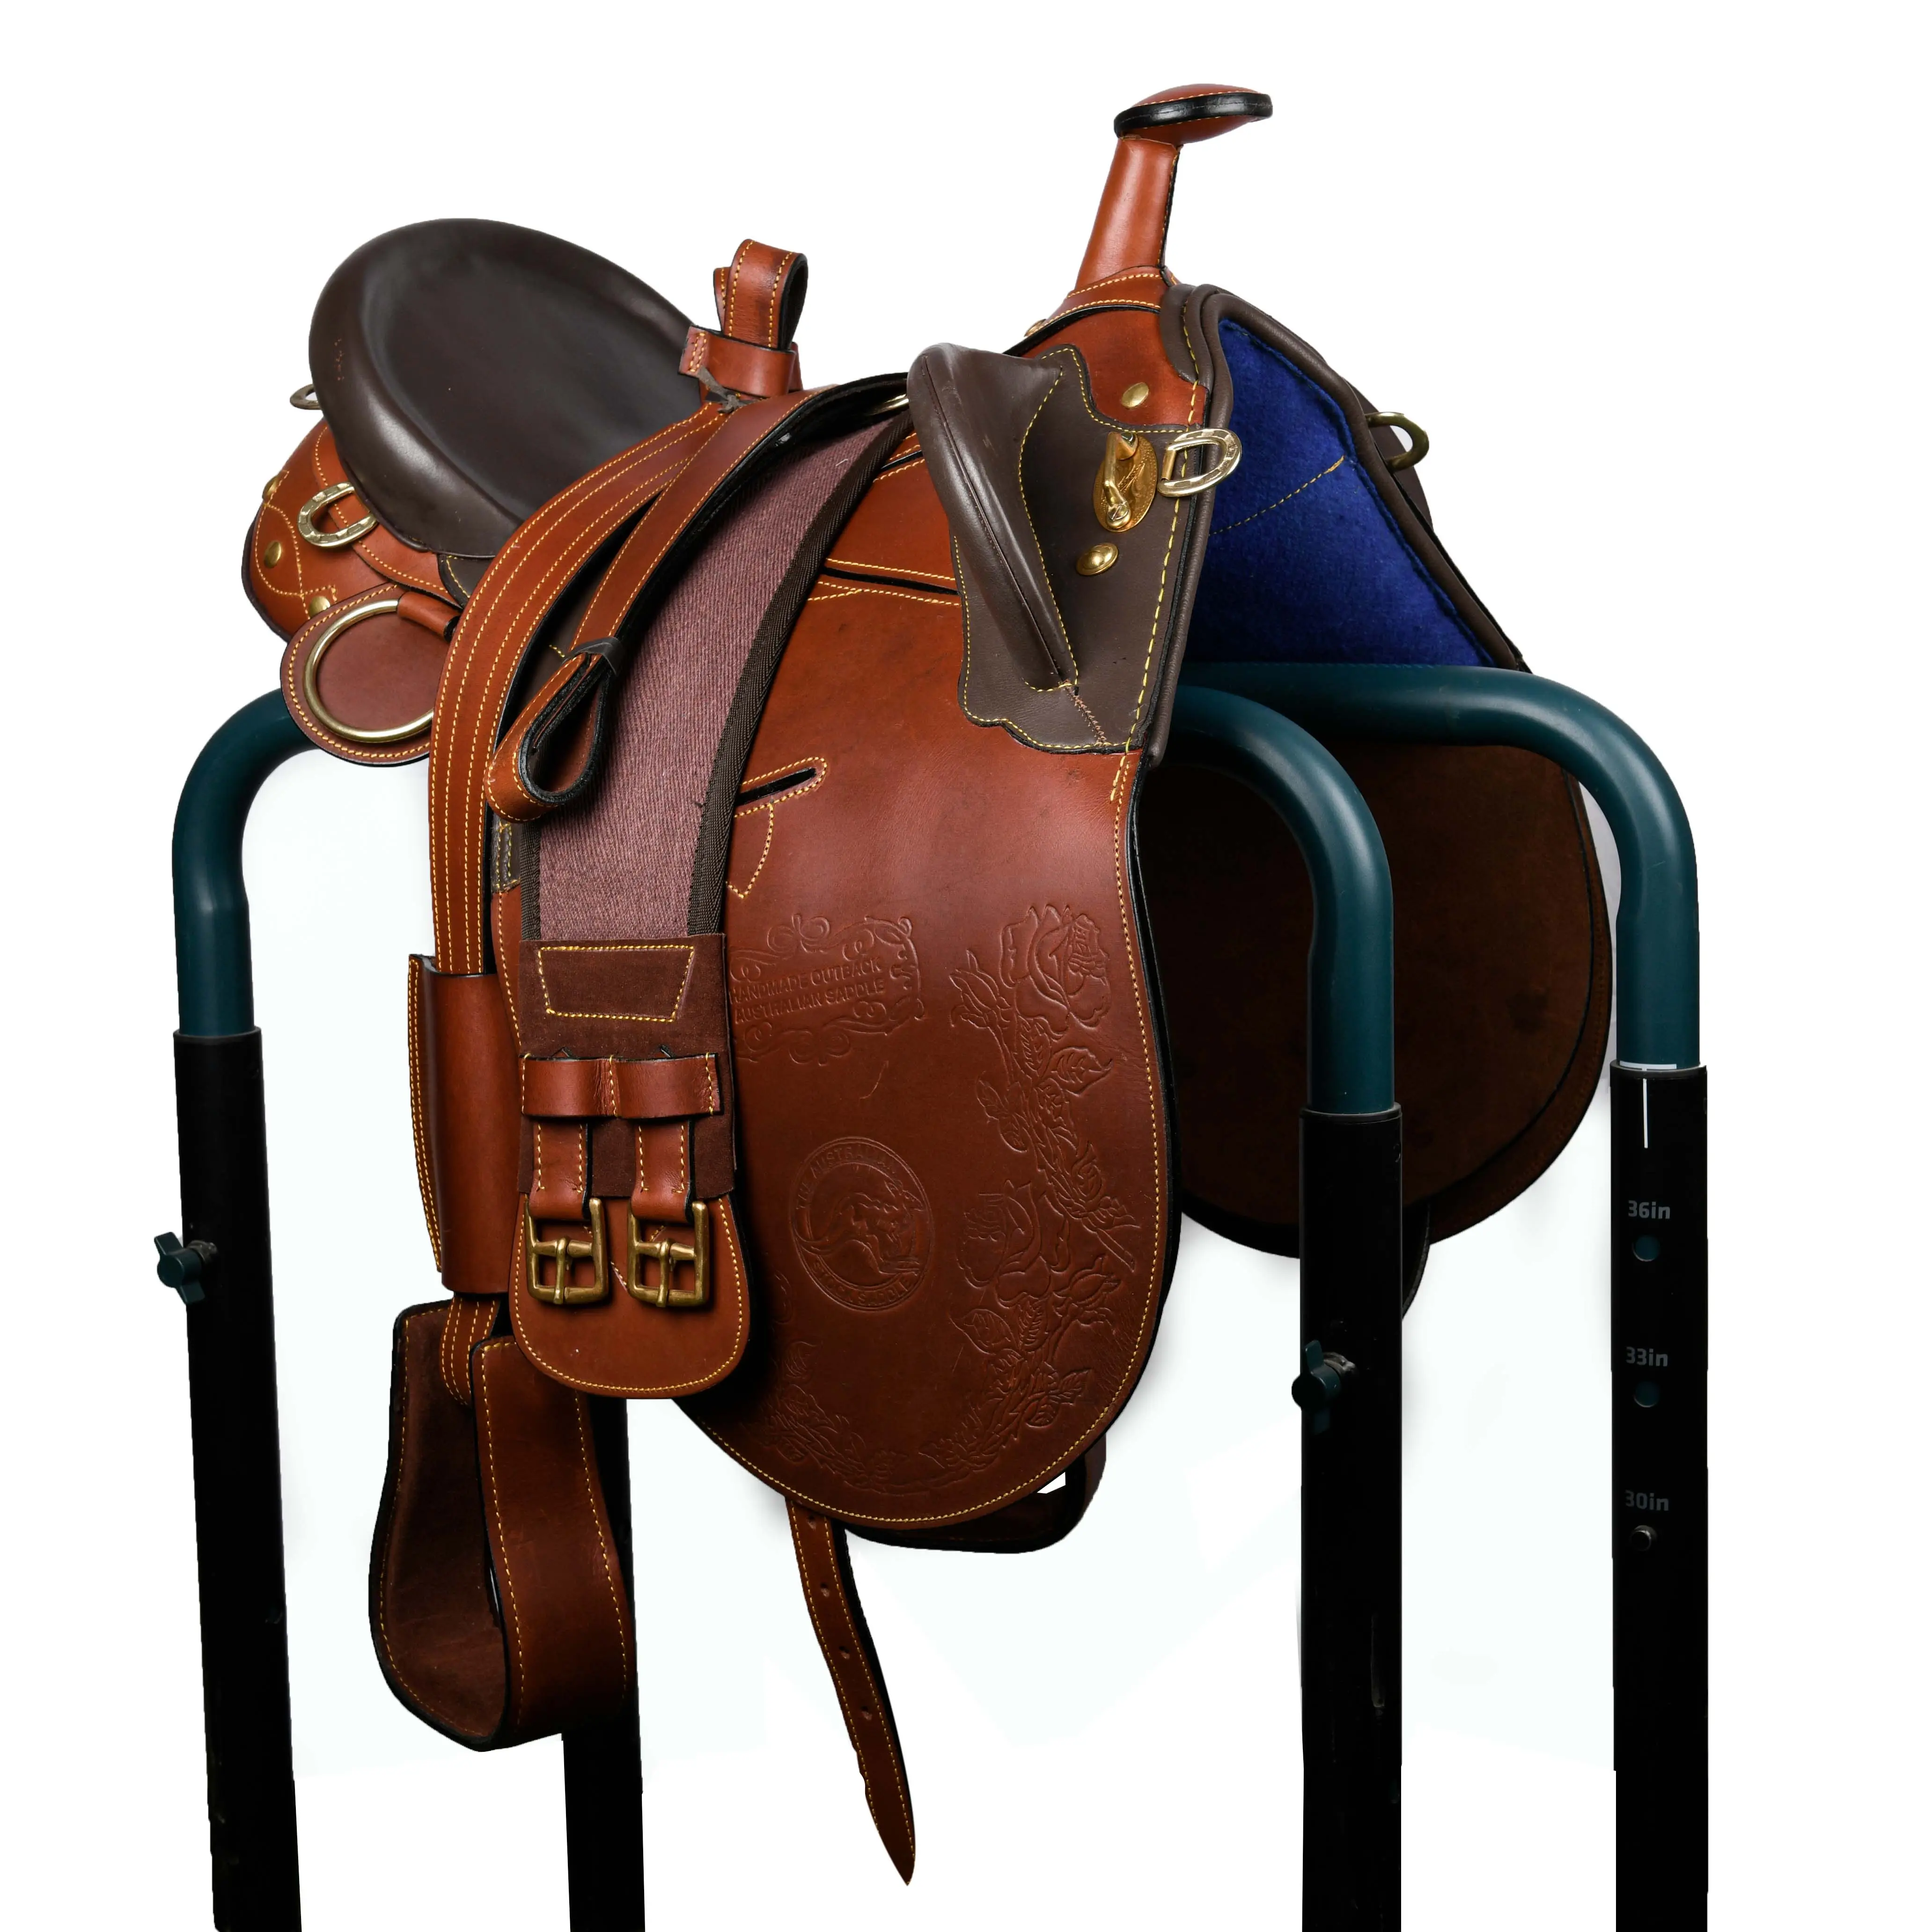 Australian Horse Saddle Leather Western Saddle Hand Tooled Design Leather Horse Equestrian Products high quality leather saddle